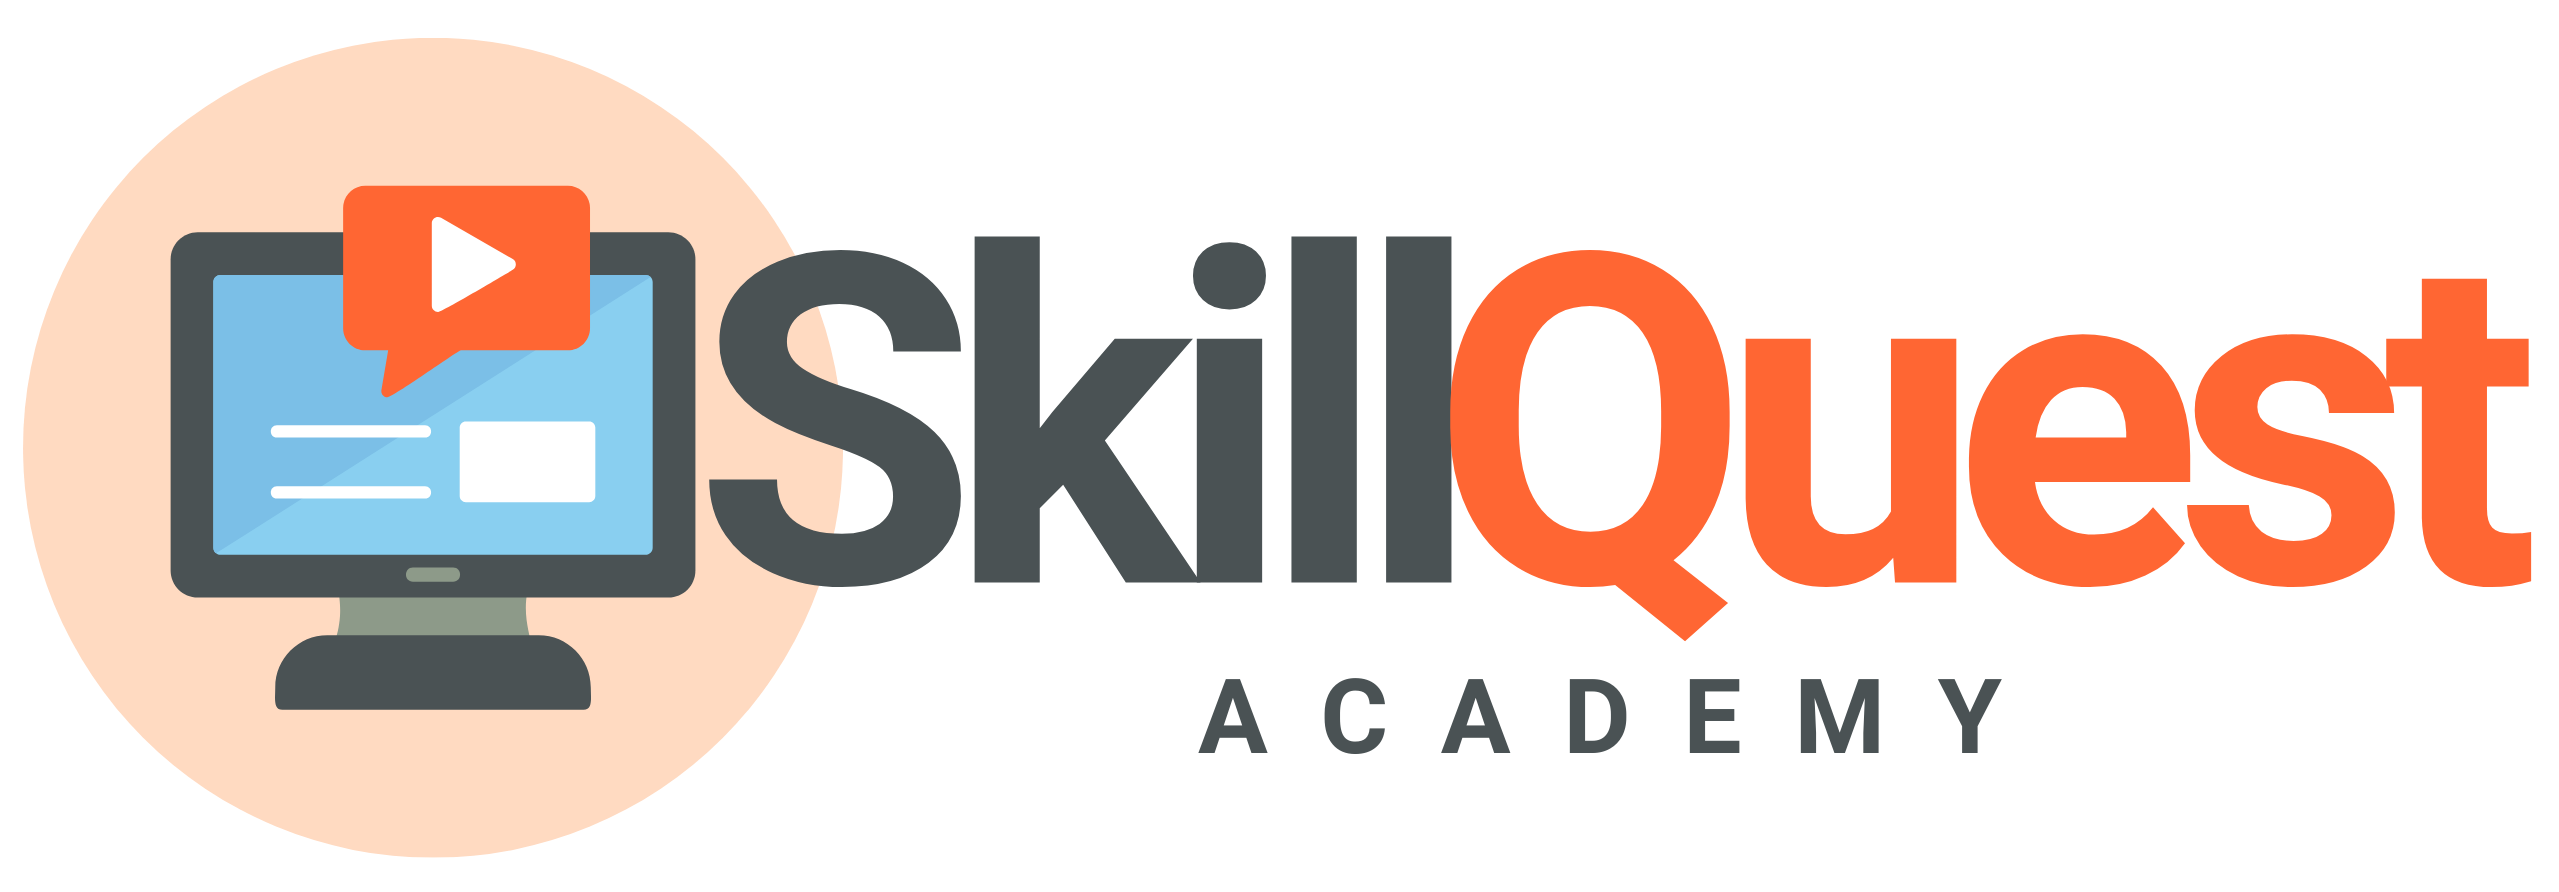 SkillQuest Academy